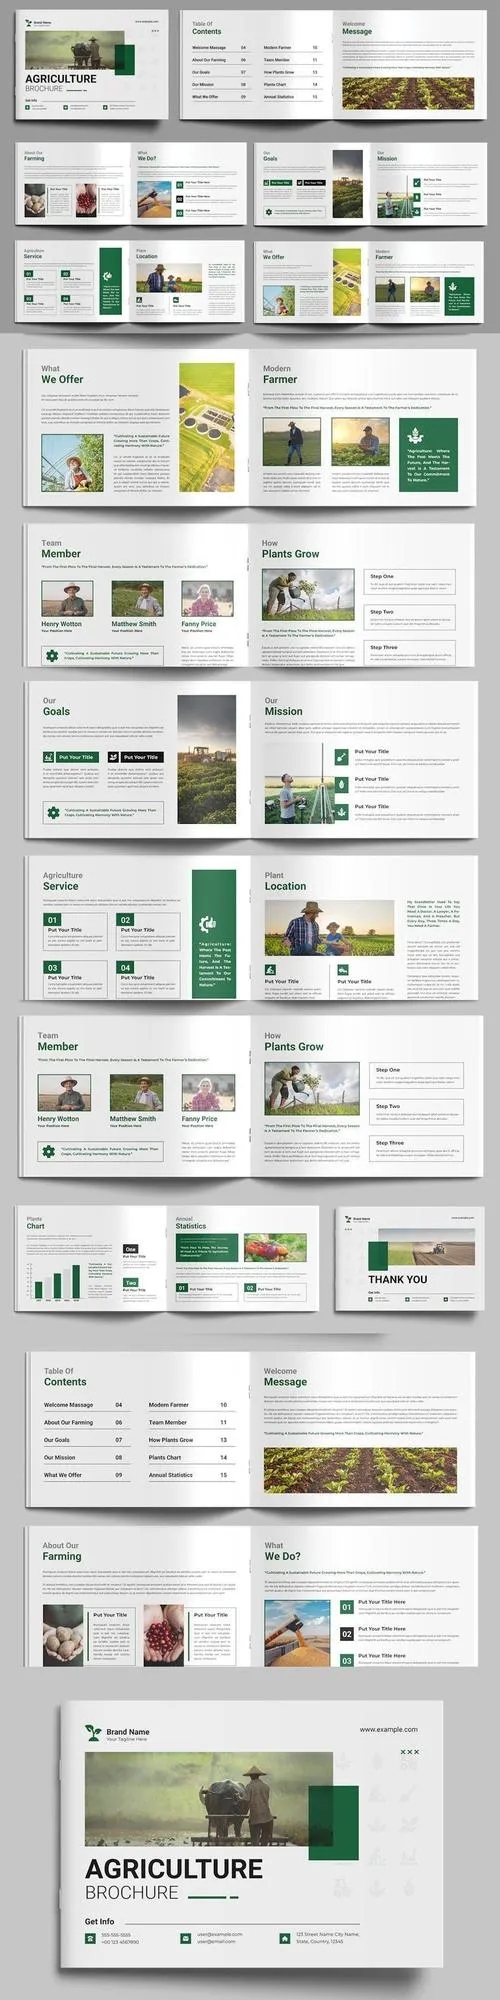 Agriculture Brochure Design Layout